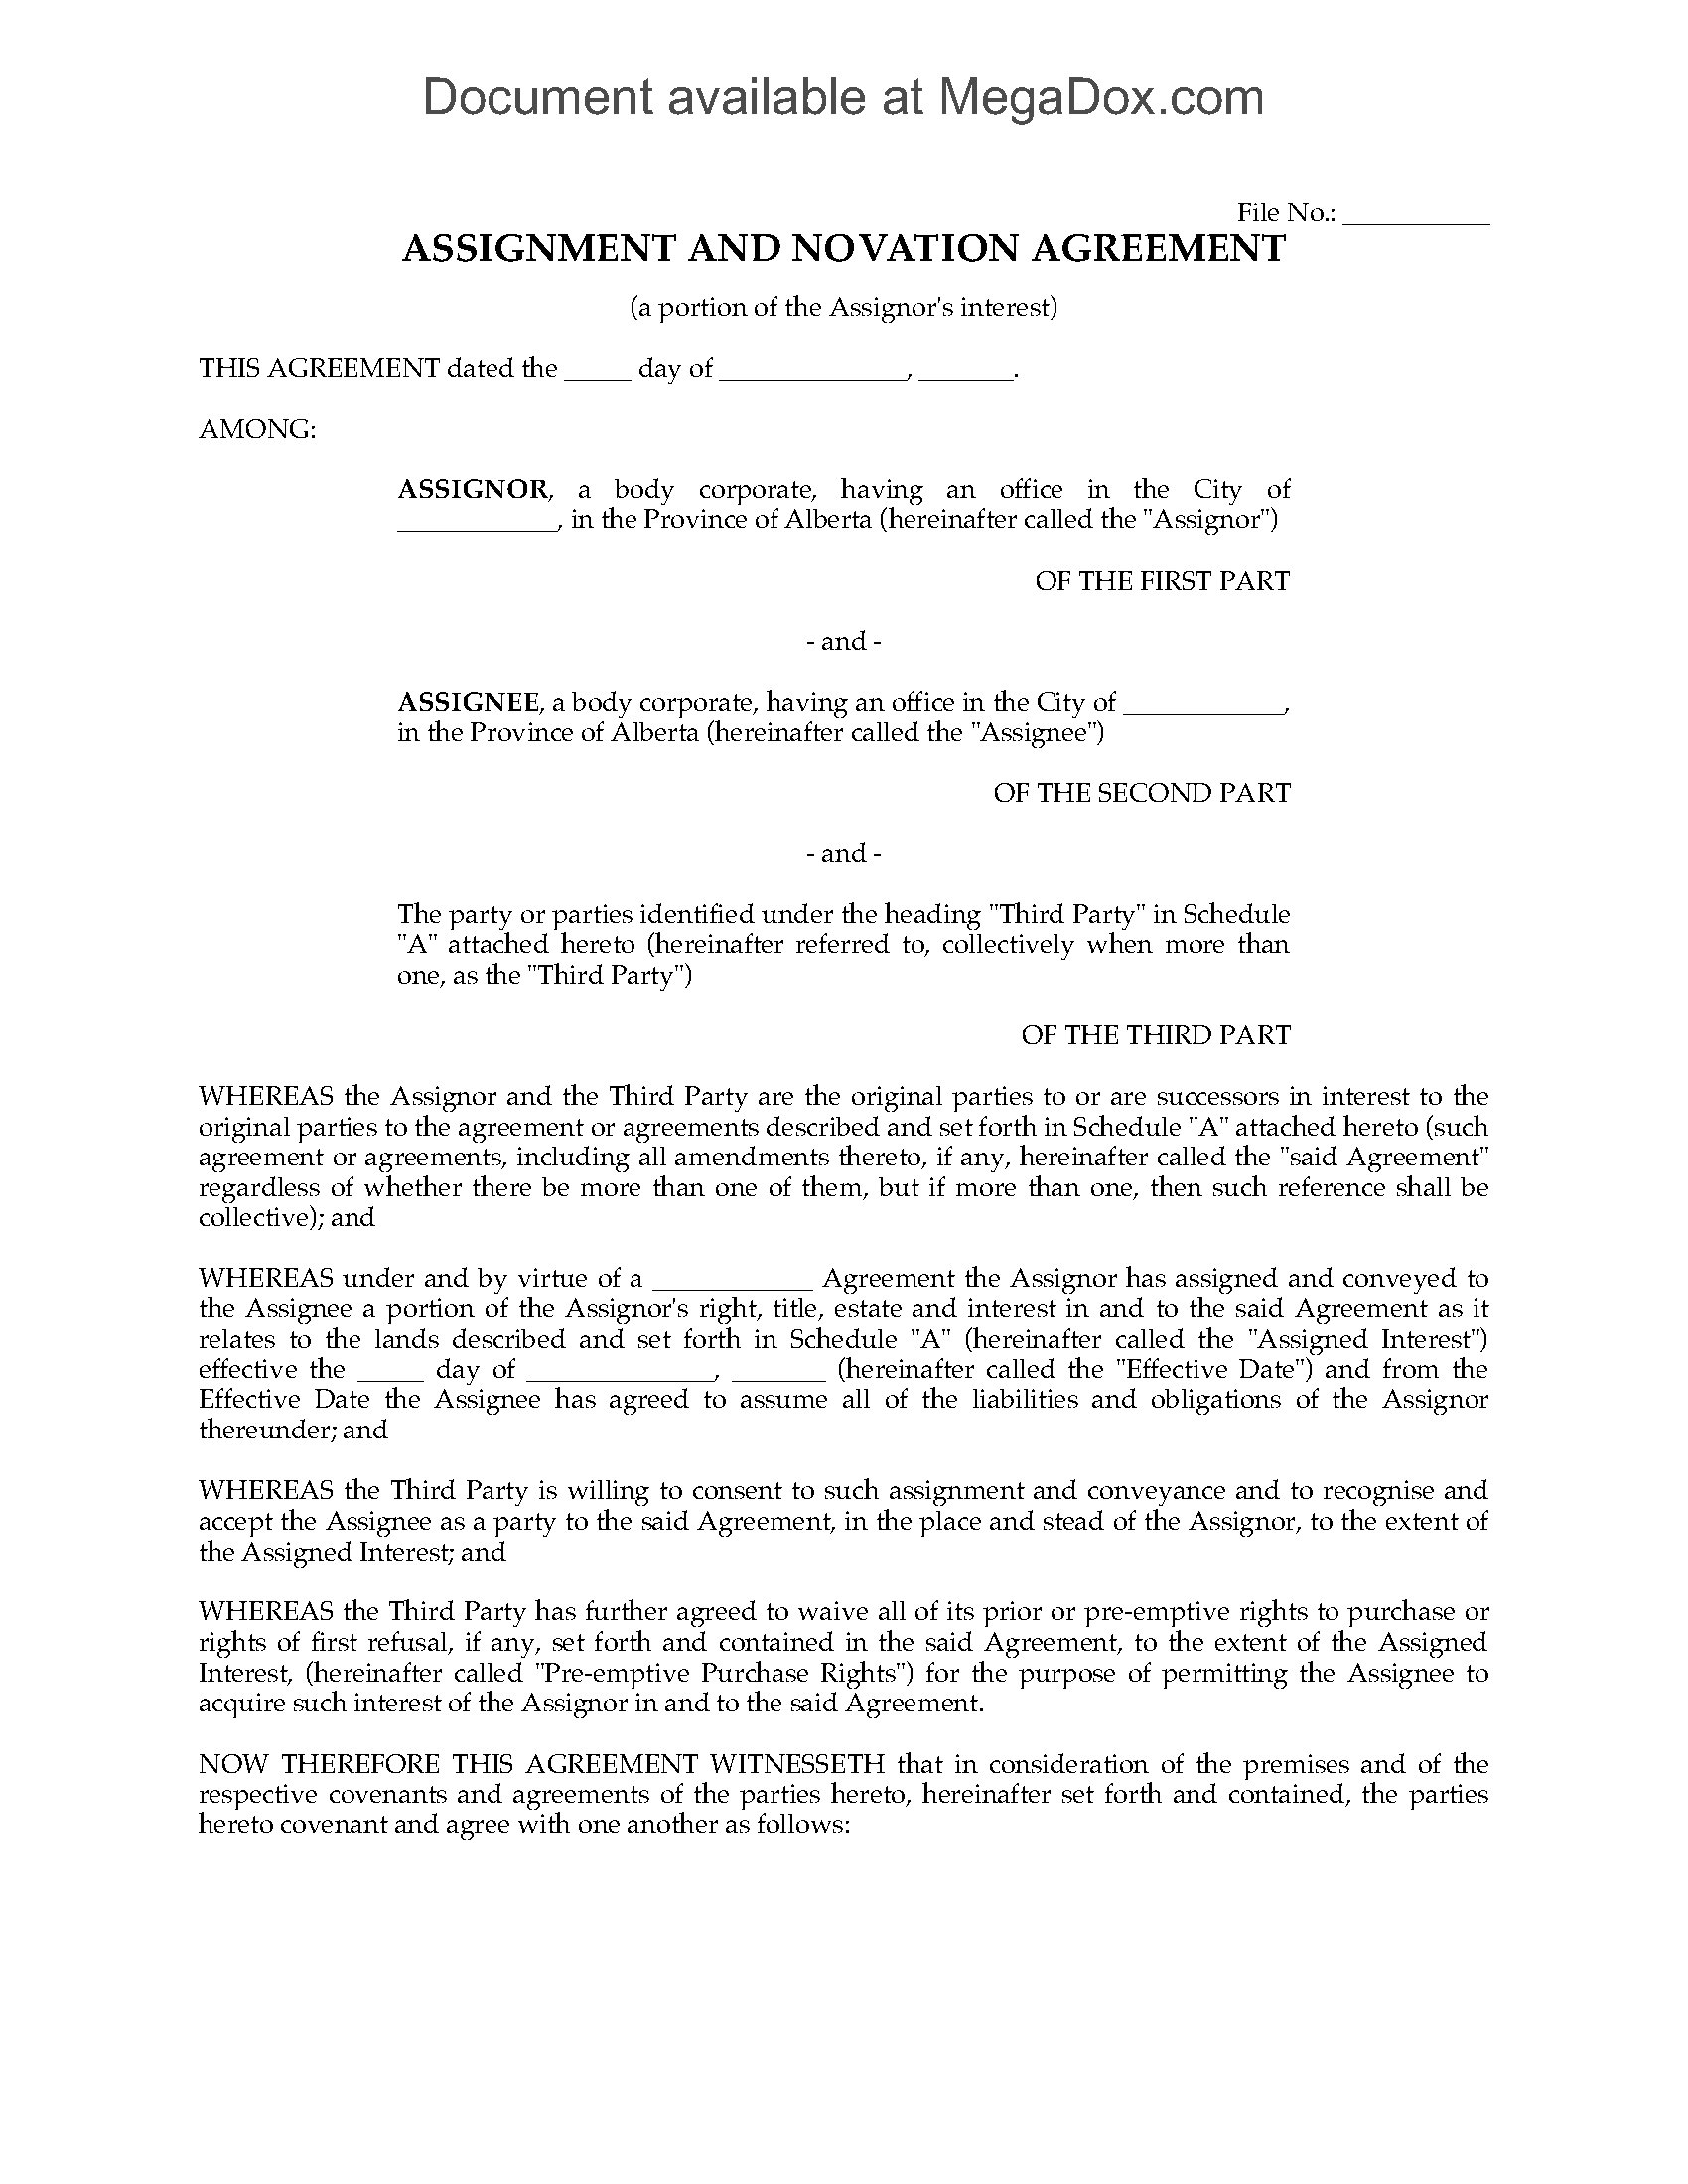 Novation Agreement Template Australia HQ Printable Documents